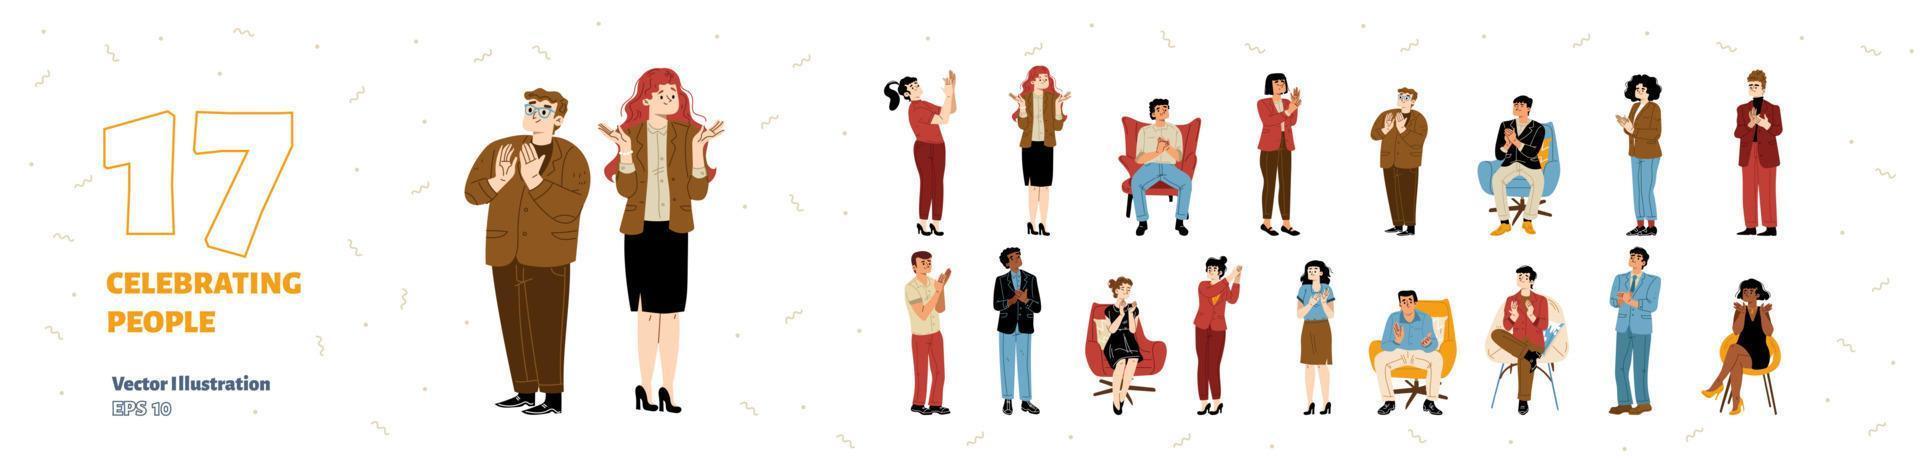 People celebrating, flat vector illustration set